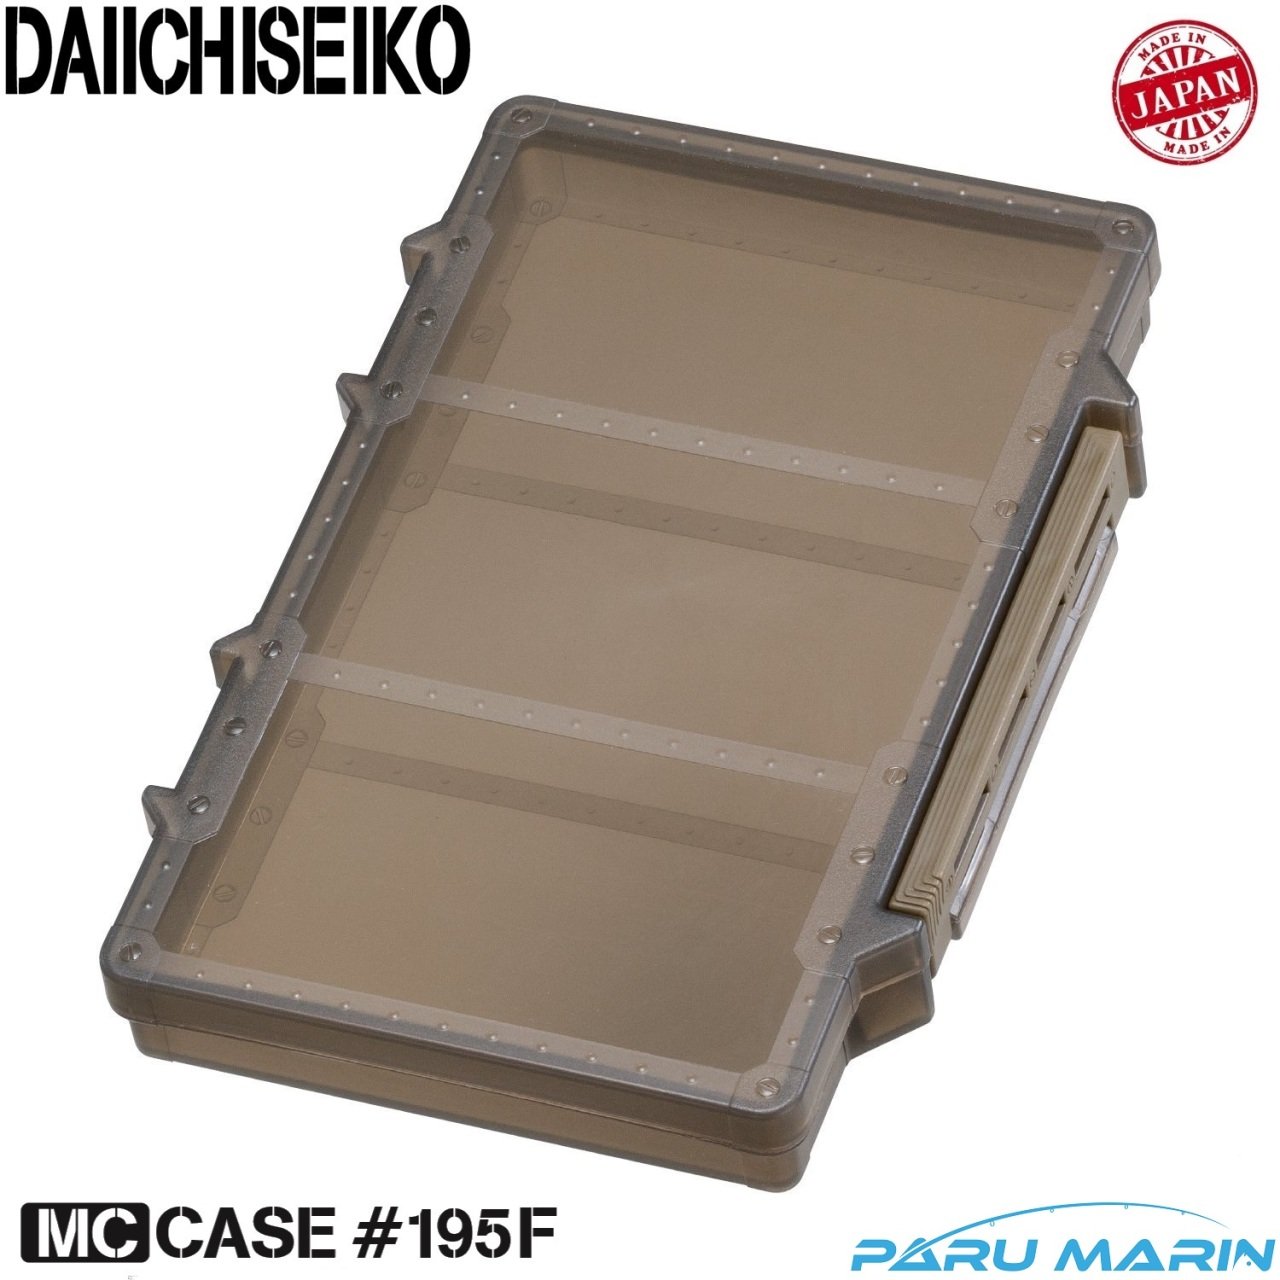 Daiichiseiko MC Case 195F Sahte ve Aksesuar Kutusu Dark Earth